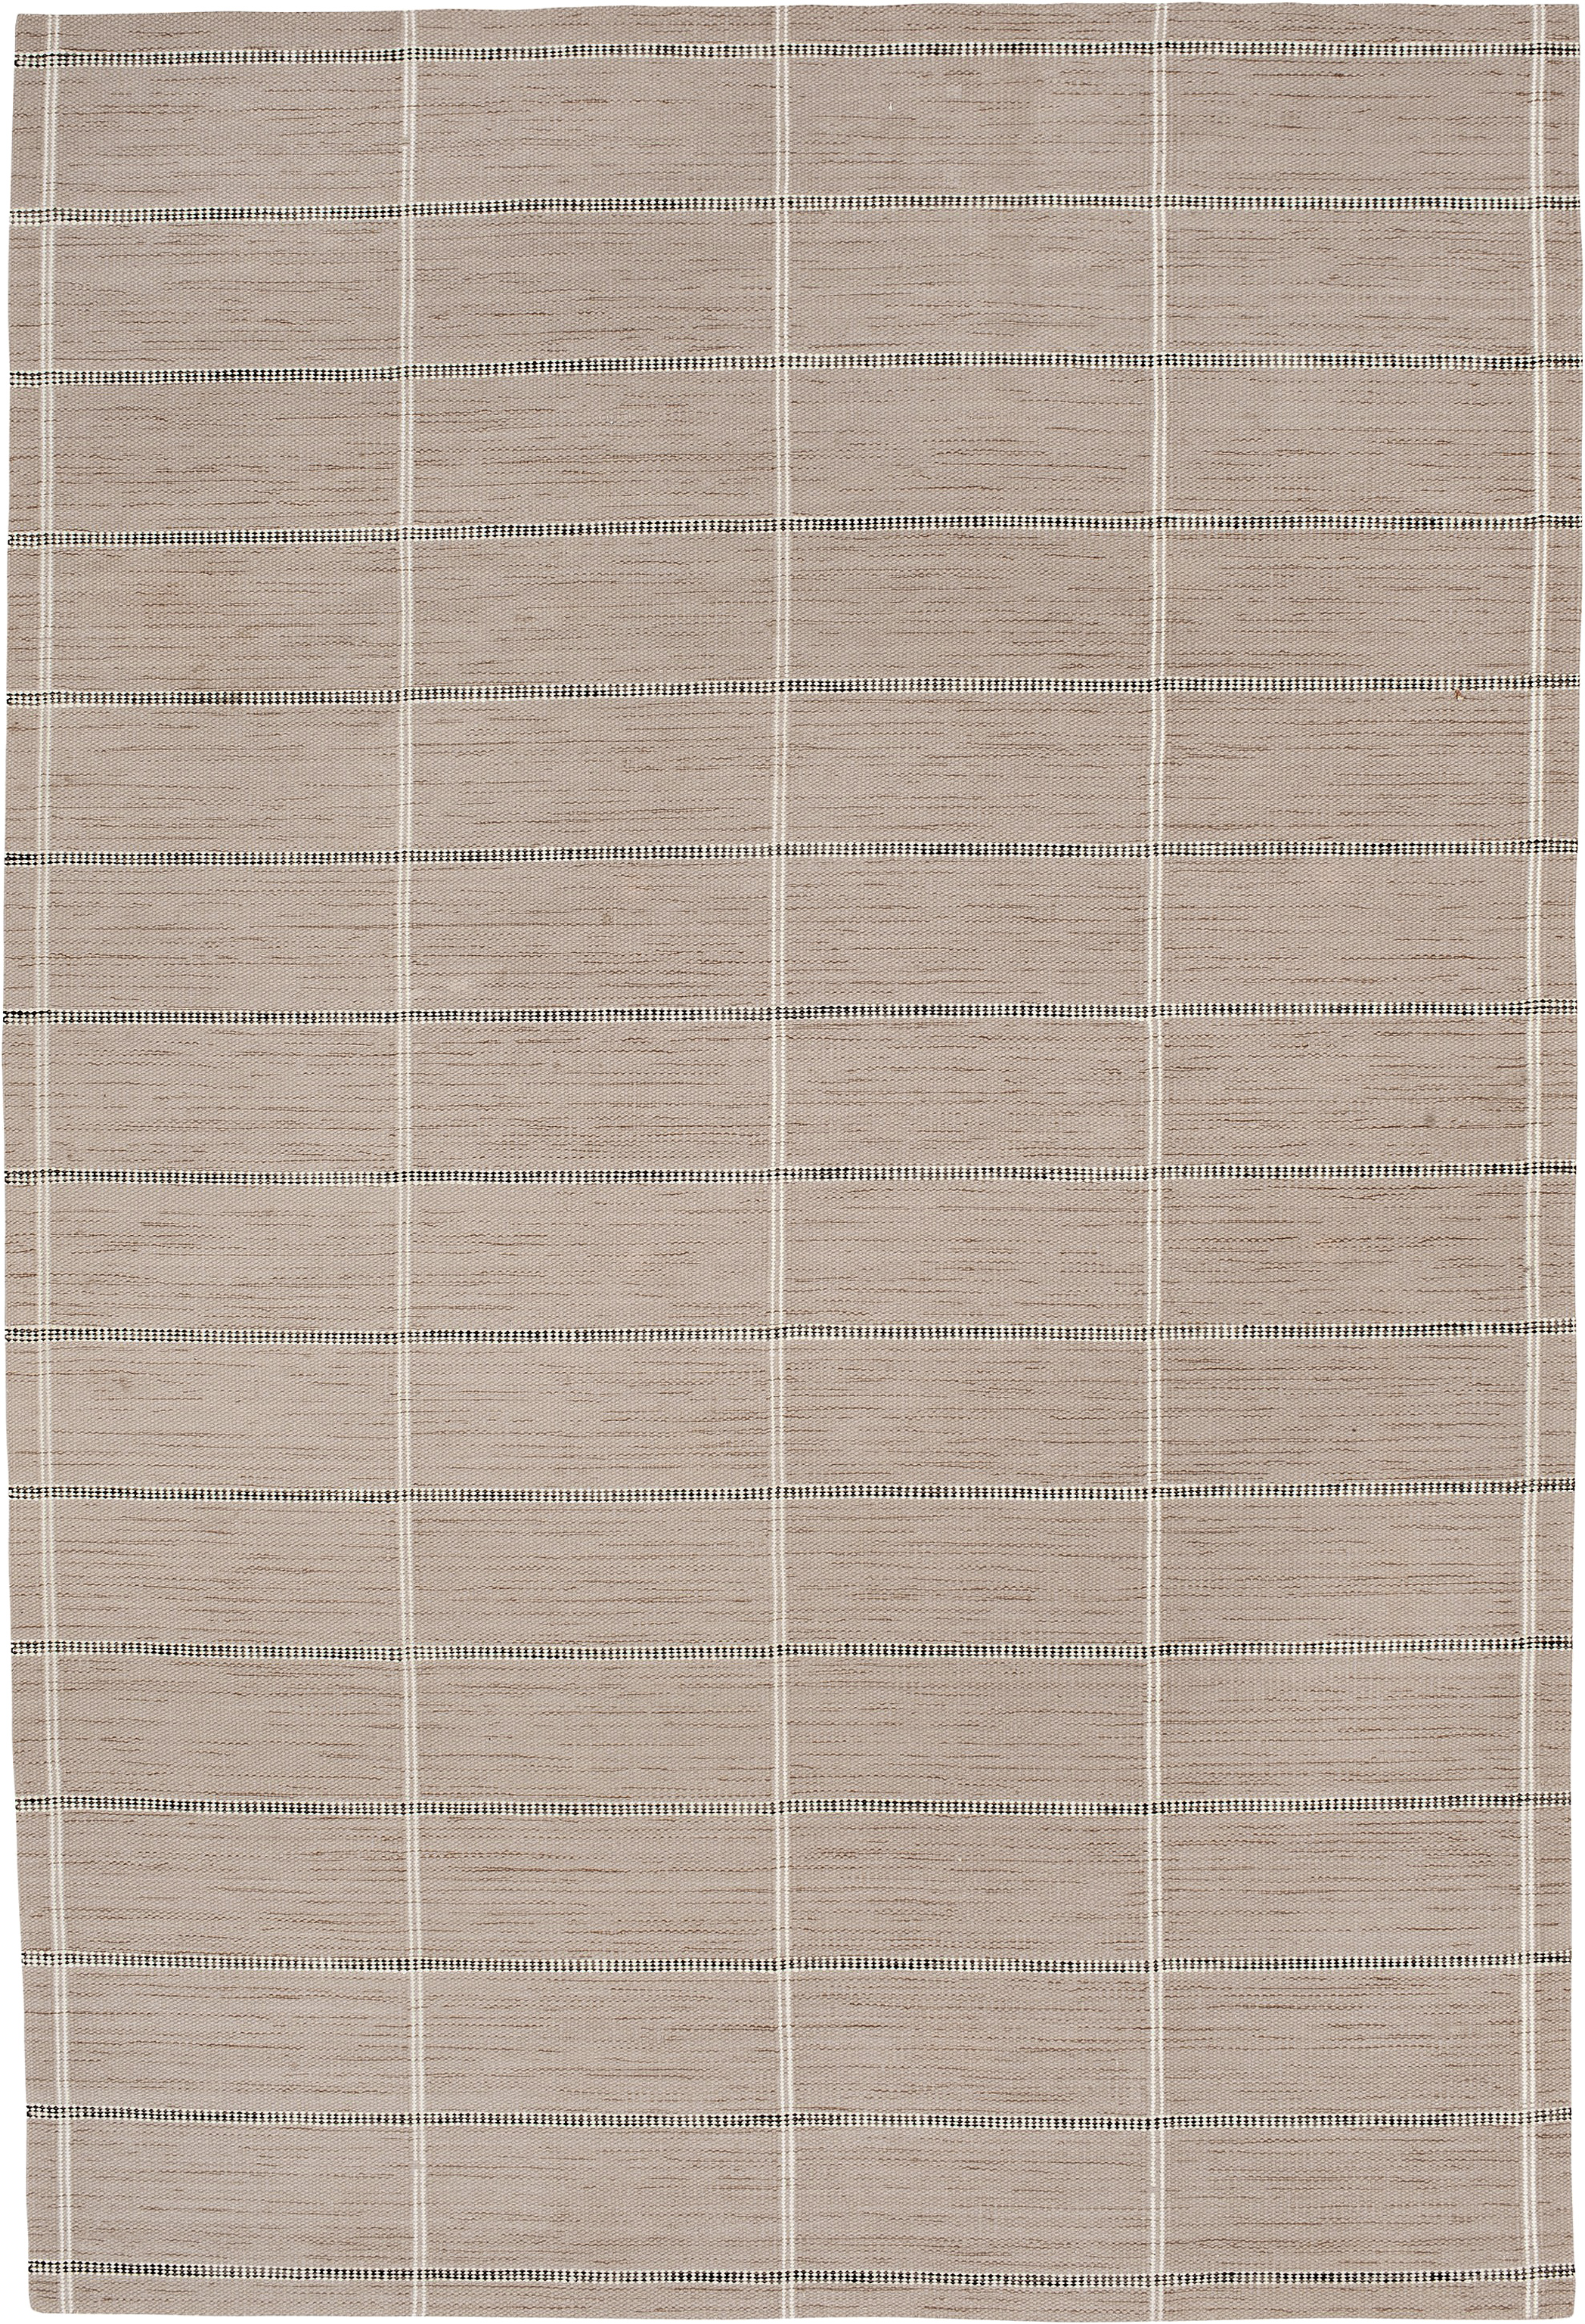 Blok Design | Custom Swedish Flat Weave Carpet | FJ Hakimian | Carpet Gallery in NY